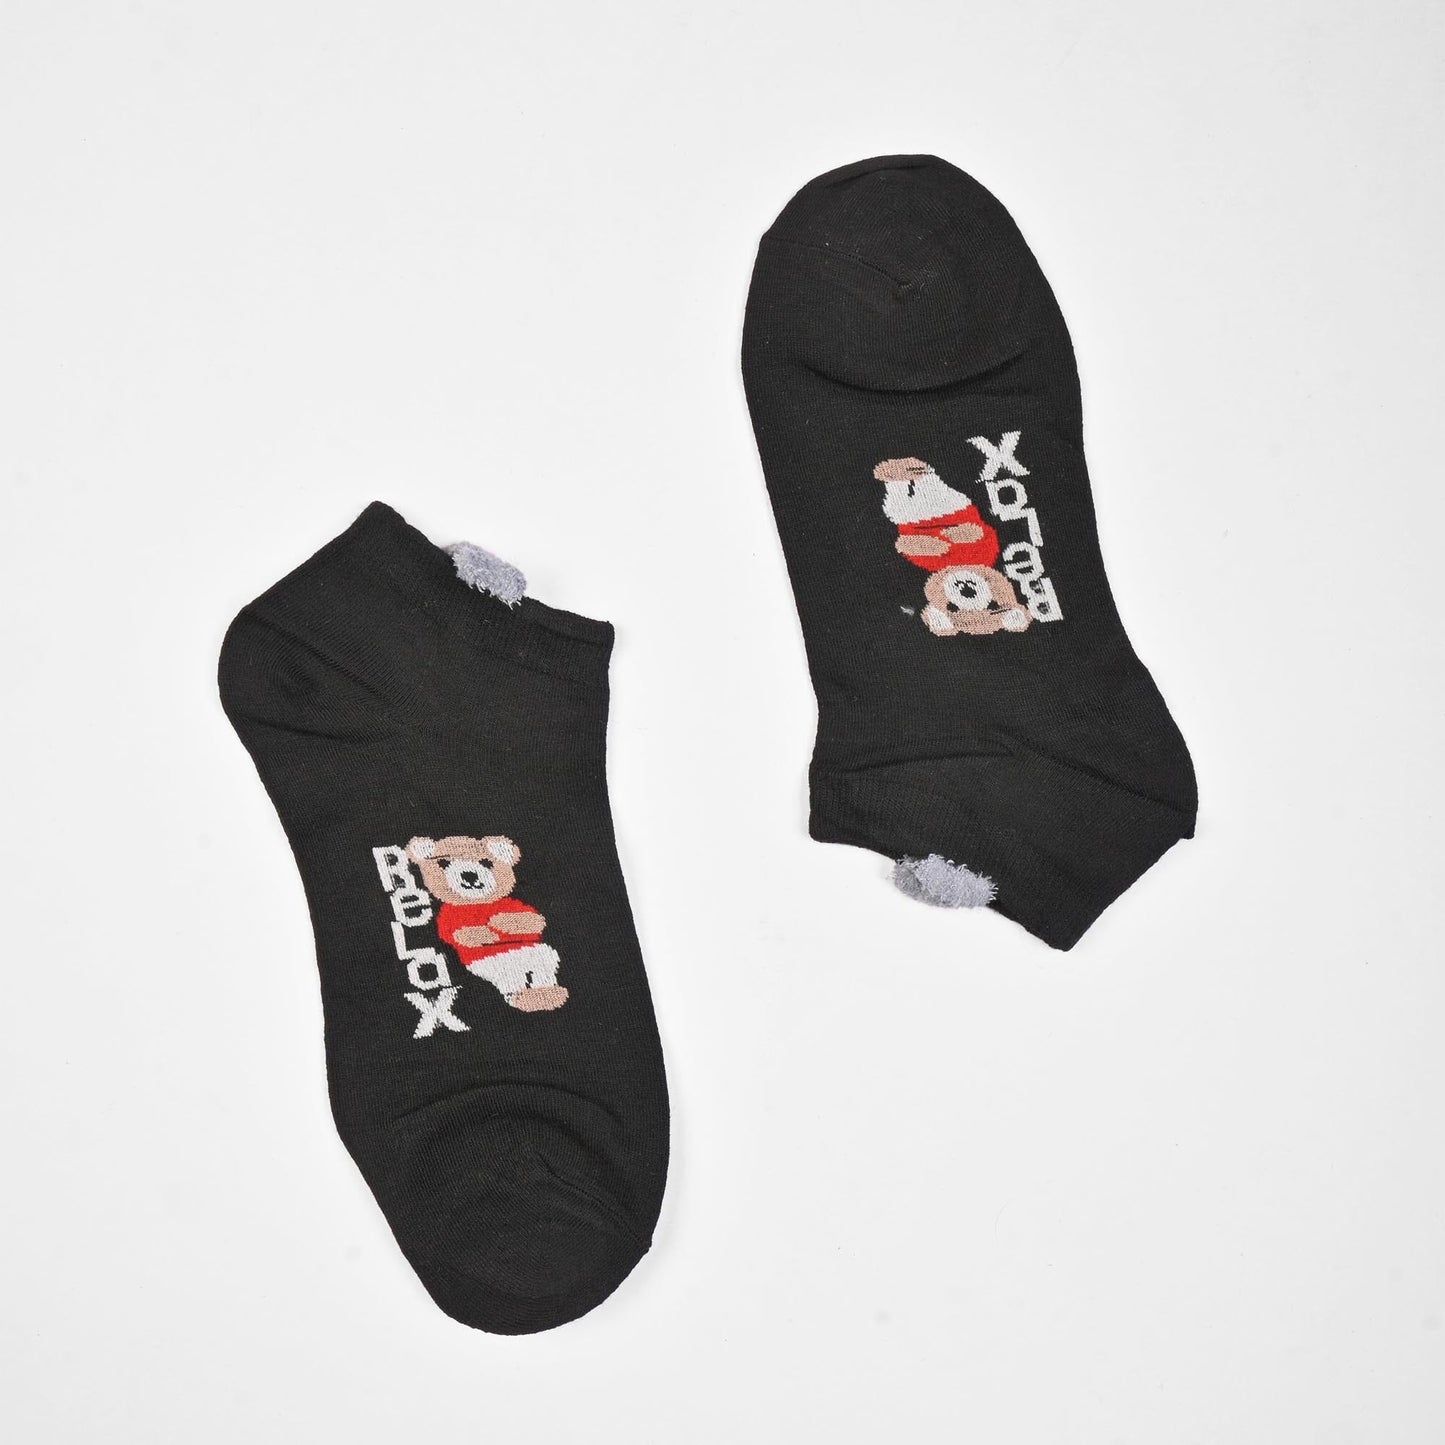 Fashion Women's Herstal Design Anklet Socks Socks SRL Black D1 EUR 35-40